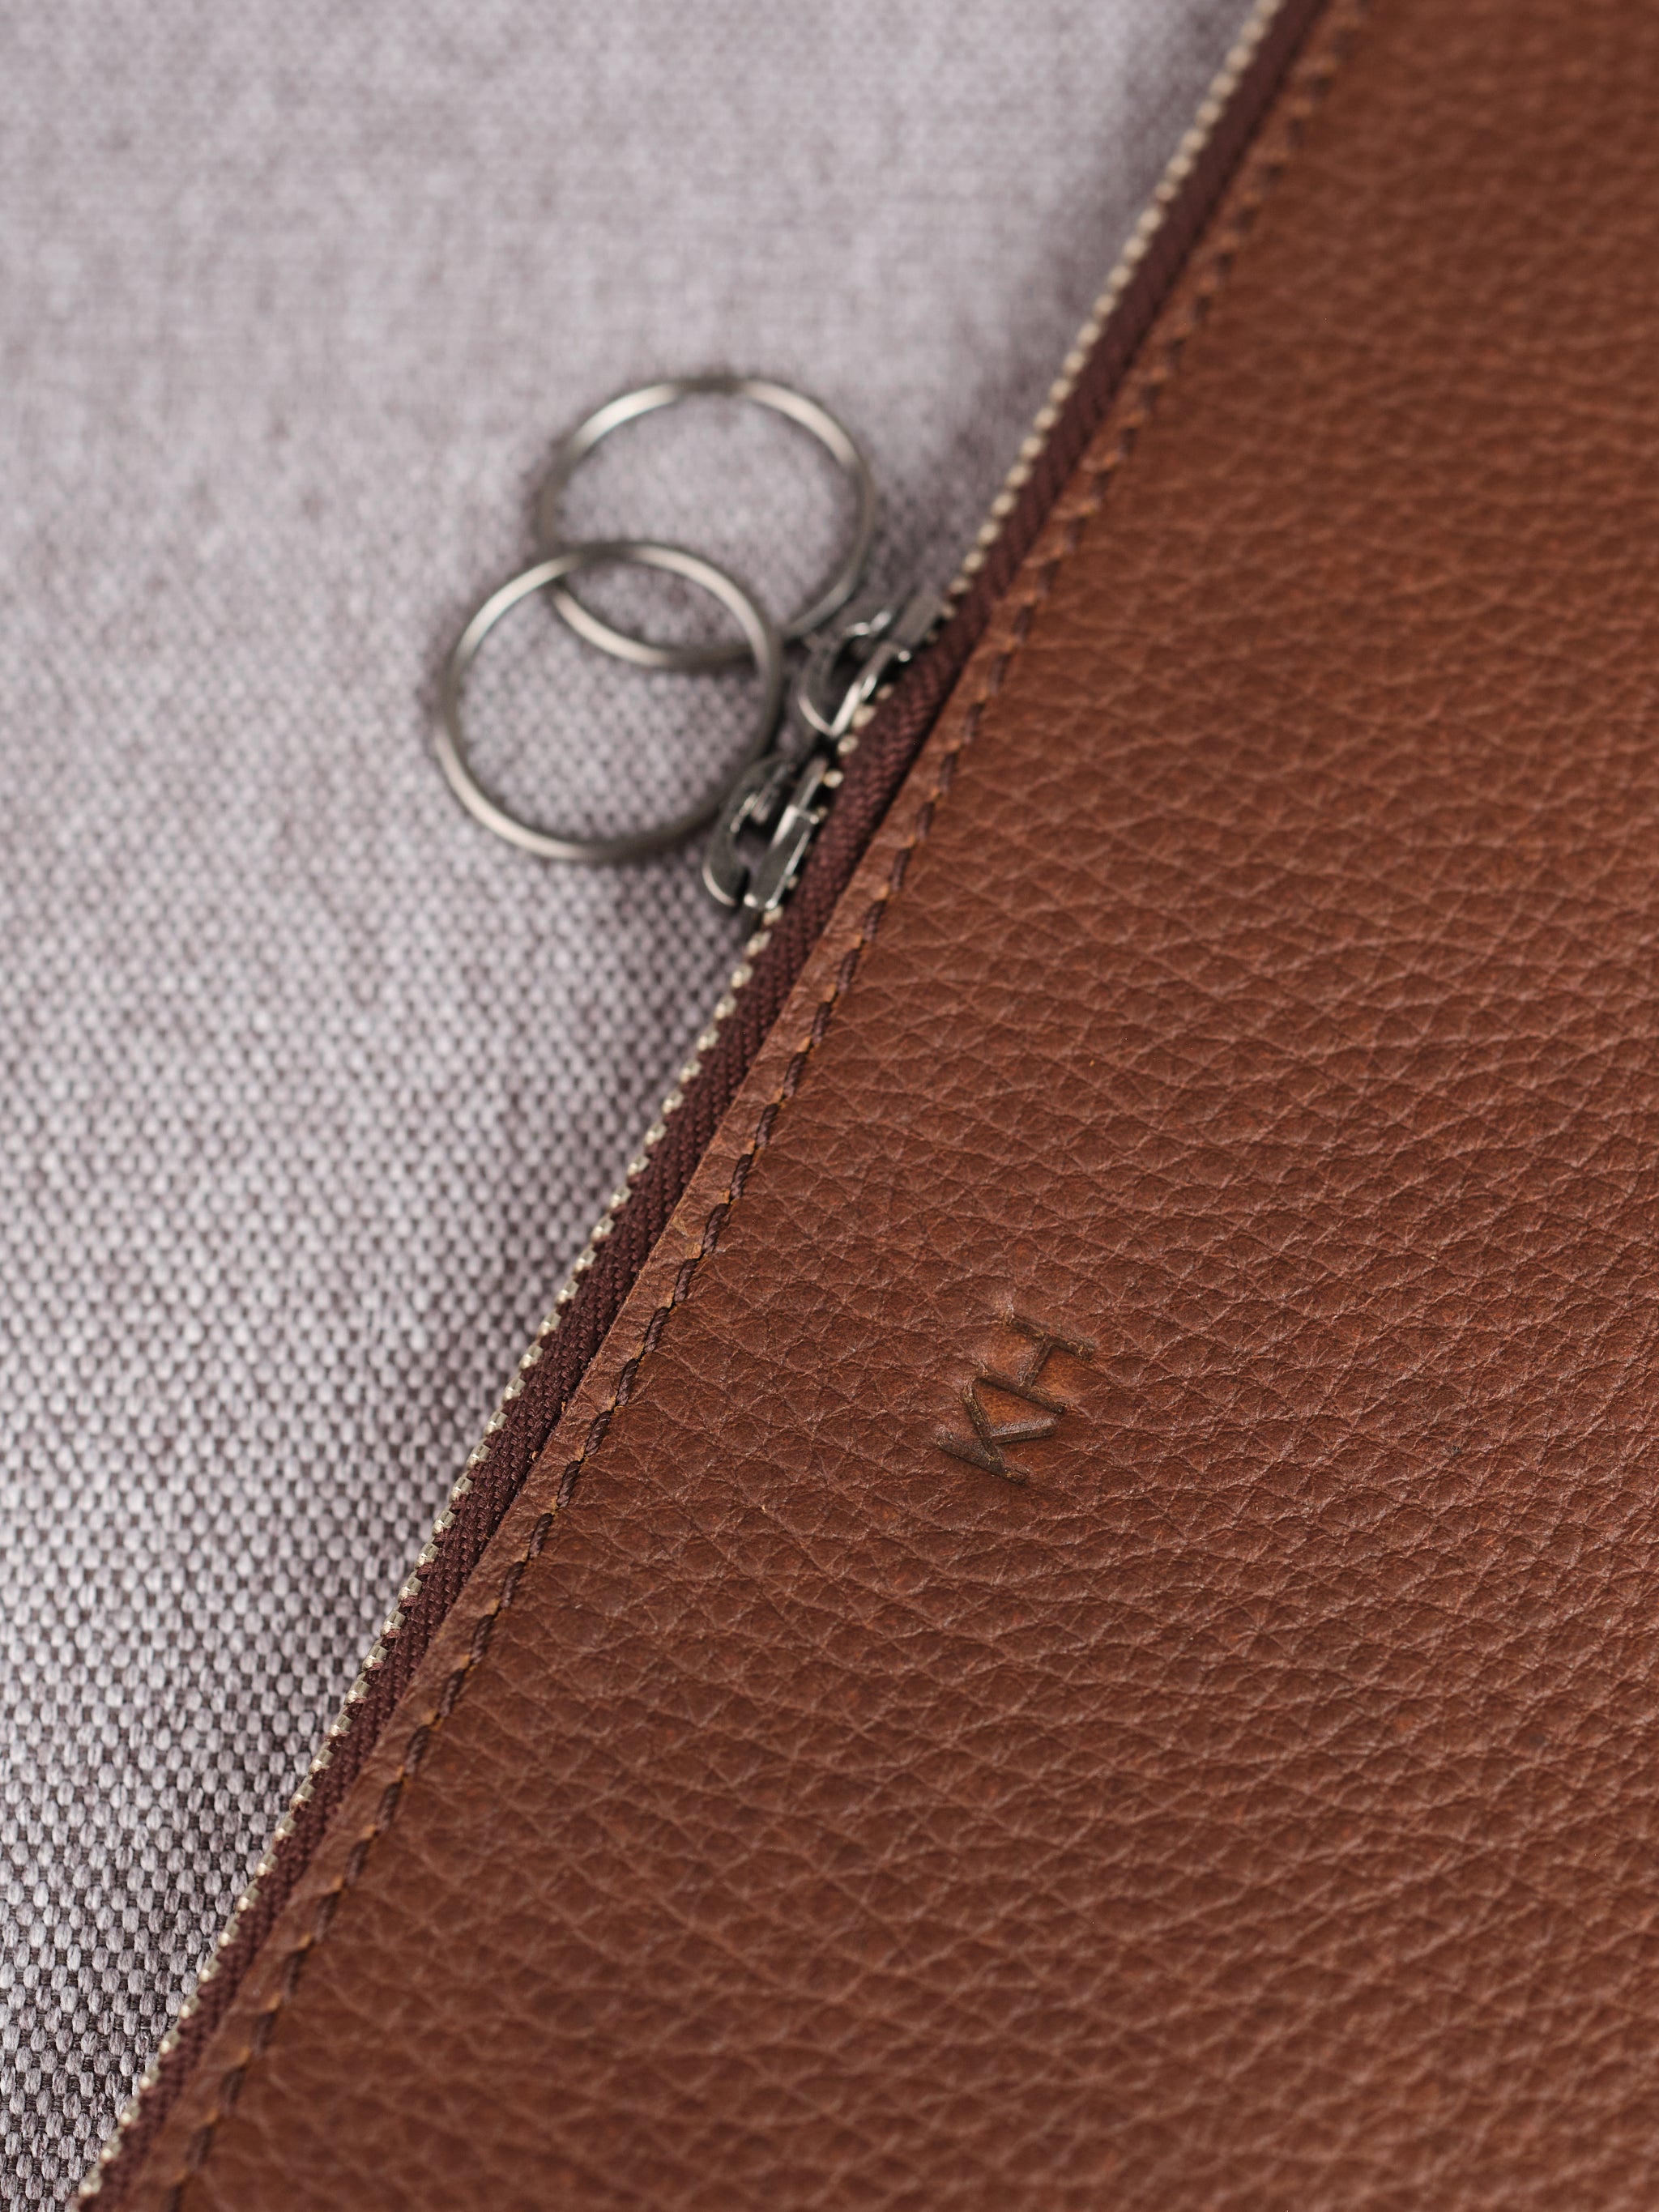 Zip around leather sleeve for iPad Air